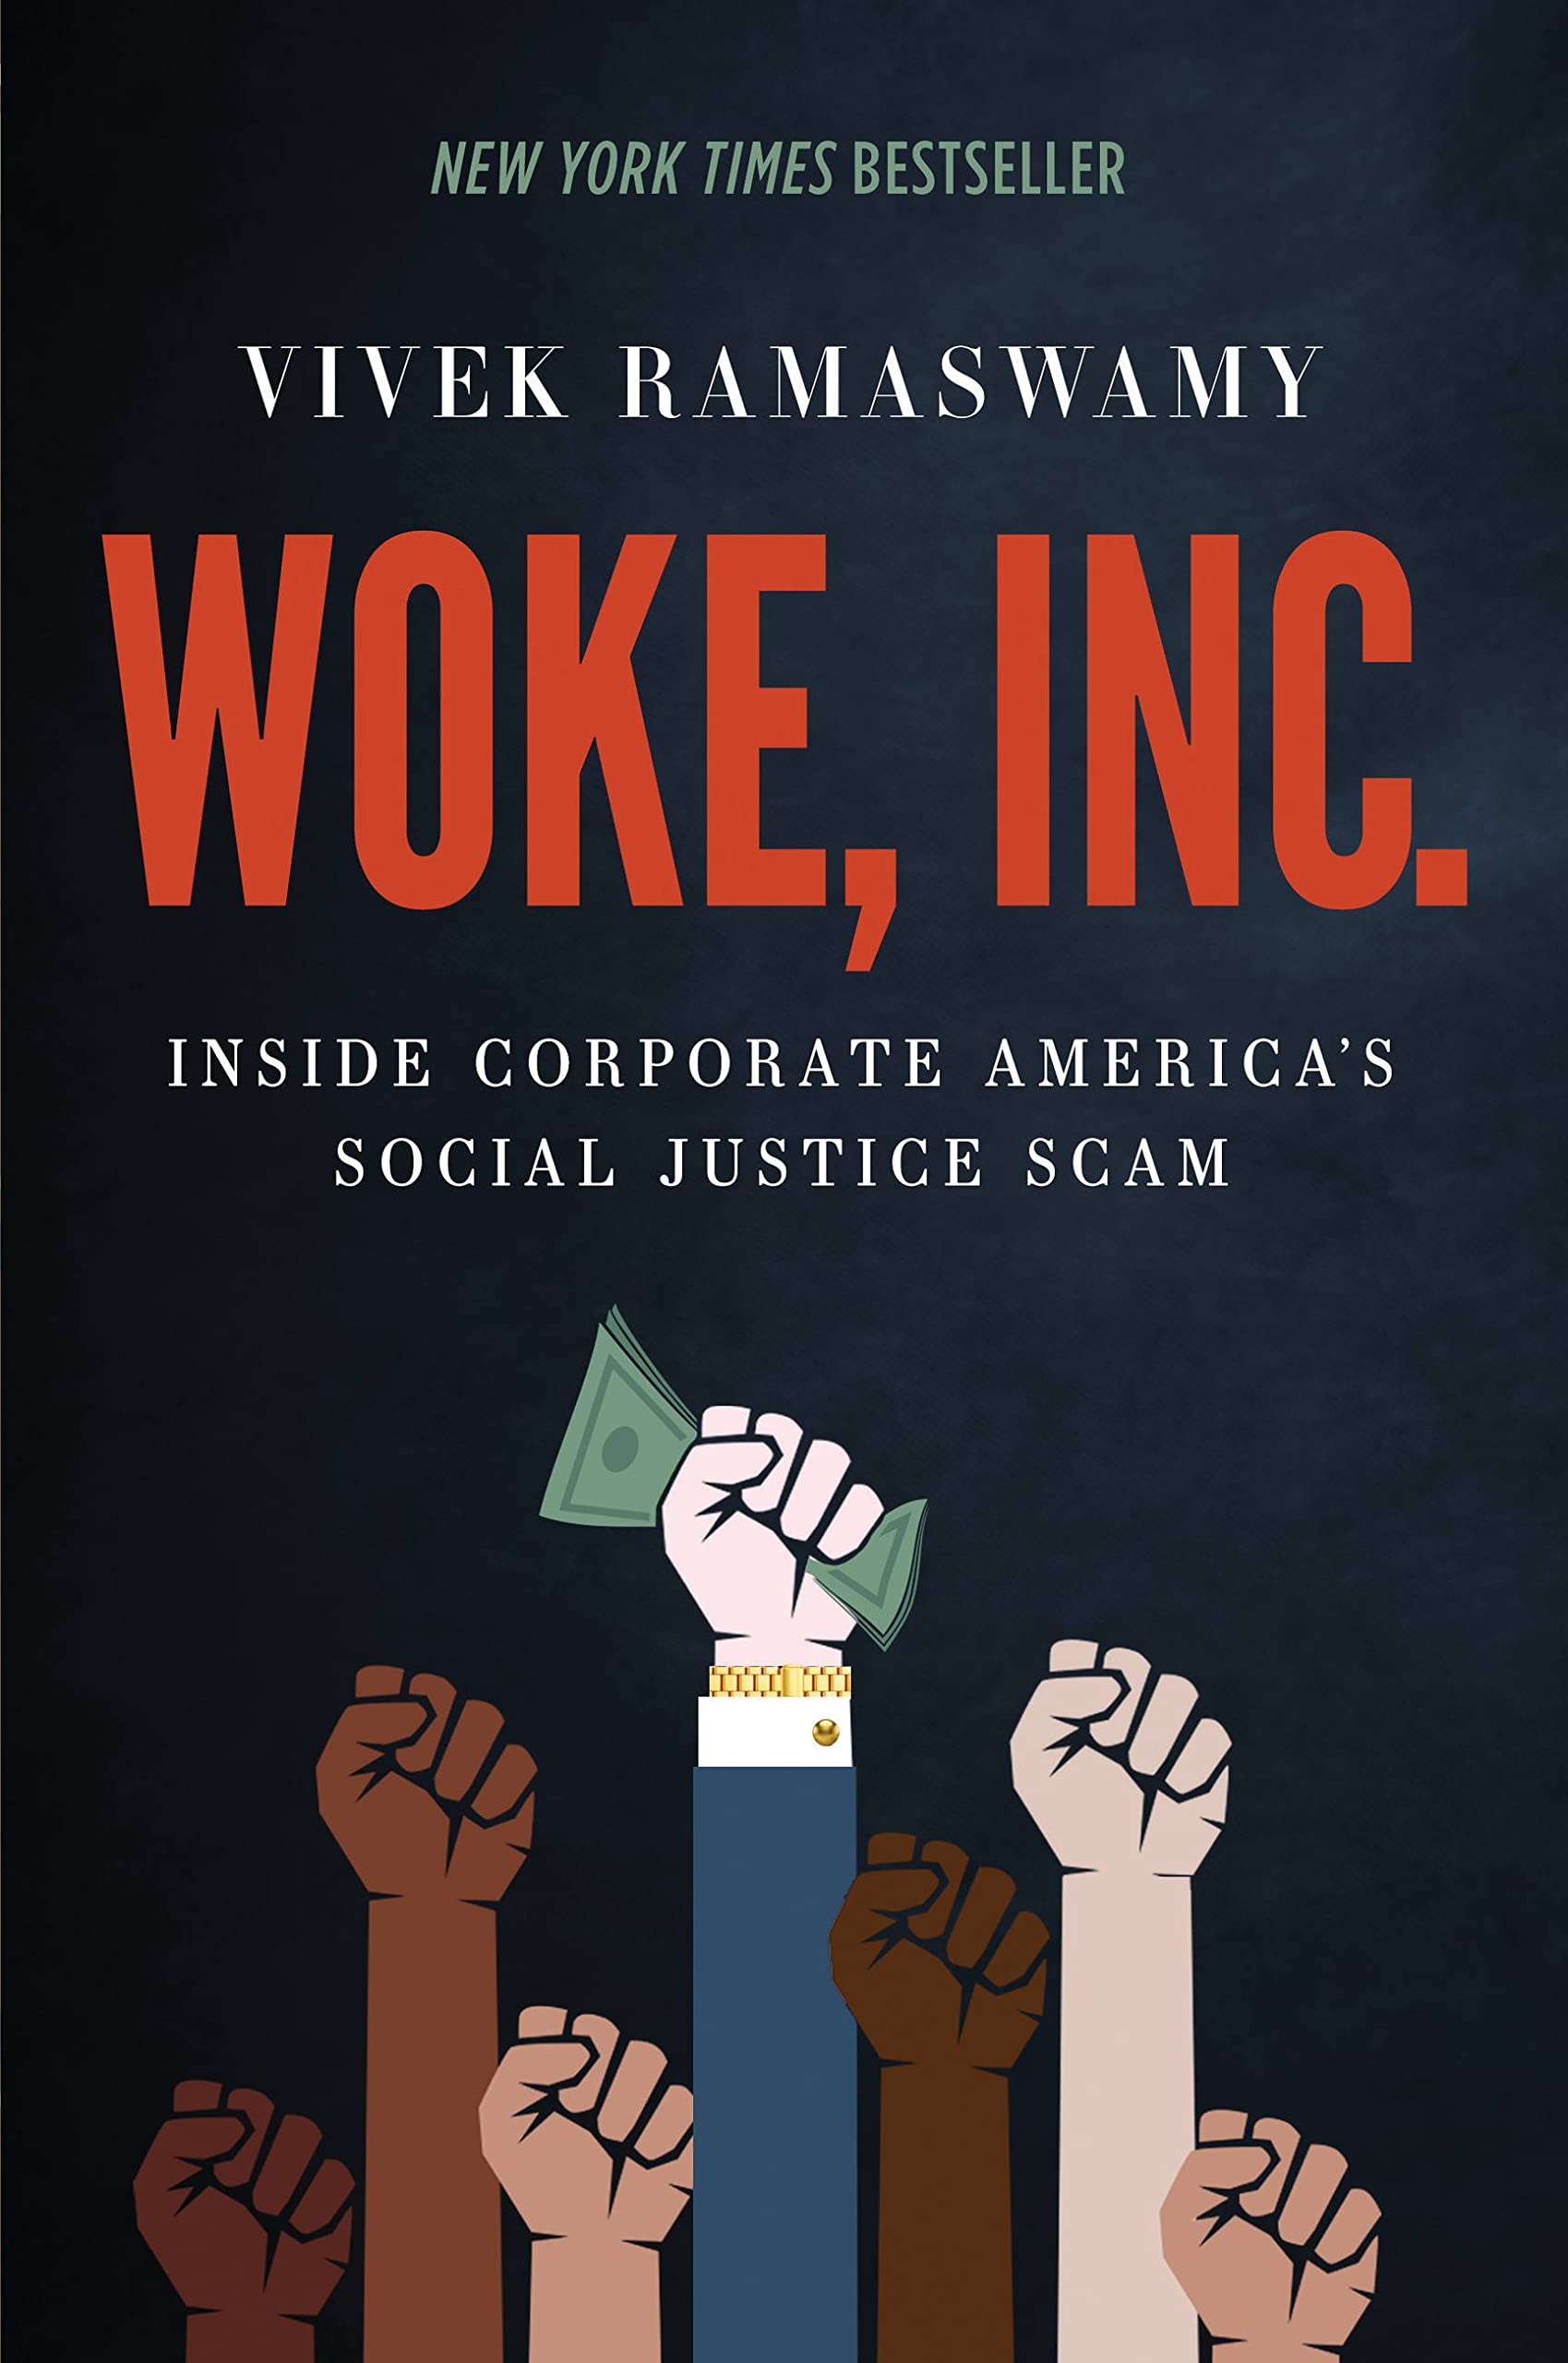 Woke, Inc.: Inside Corporate America's Social Justice Scam (eBook) by Vivek Ramaswamy $2.99